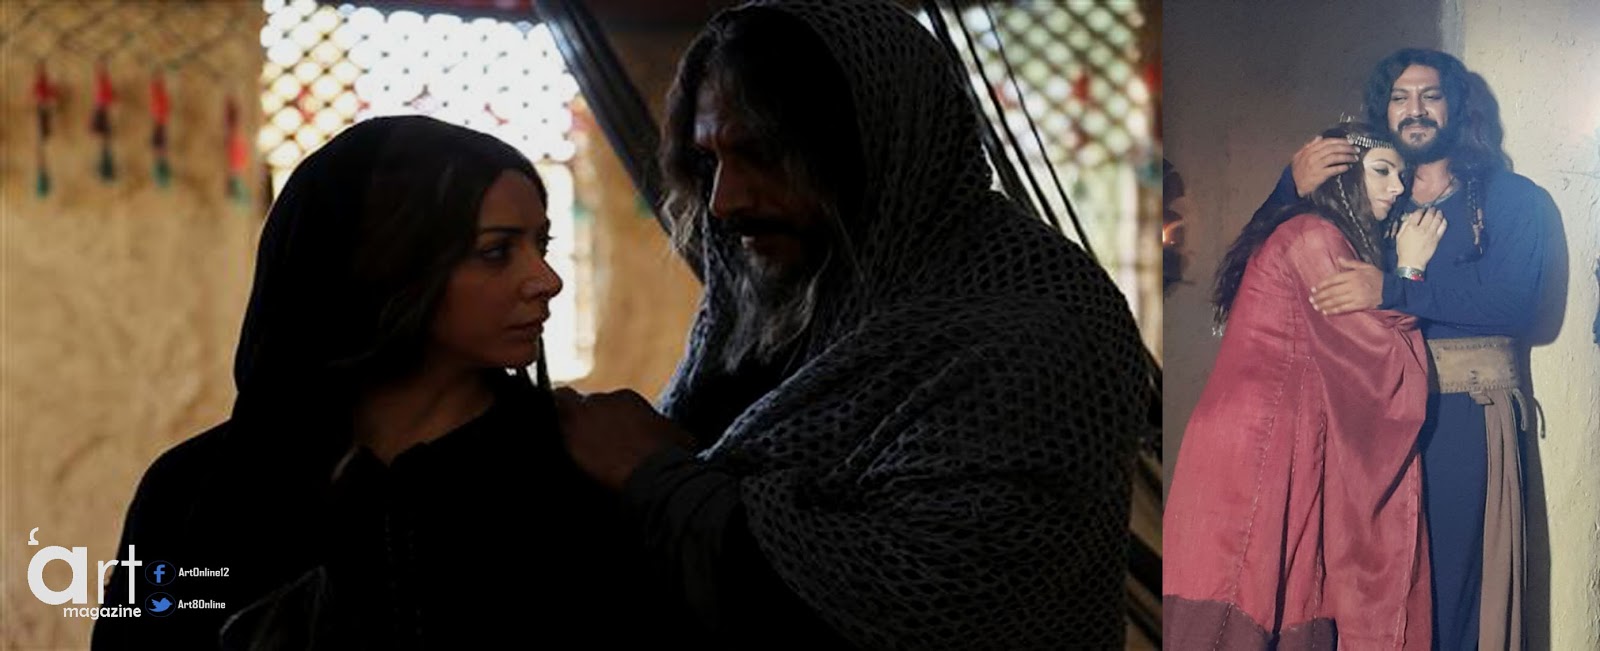 Foxmag مسلسل تاريخي رمضاني يروي حكاية روبن هود العرب